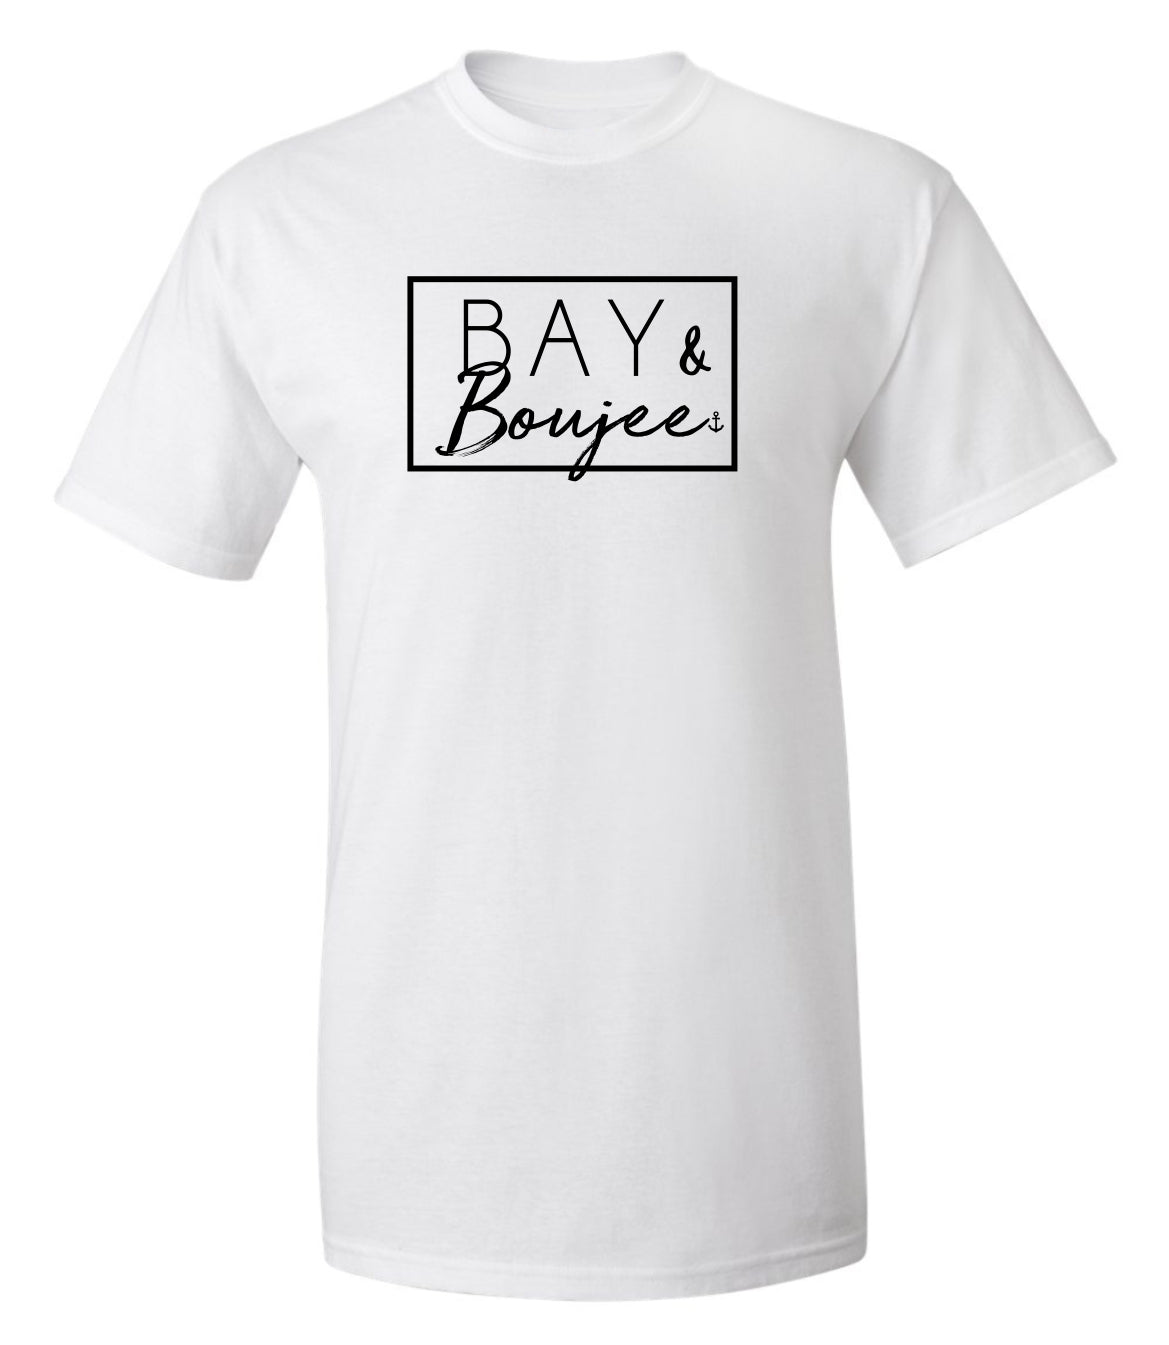 "Bay & Boujee" T-Shirt